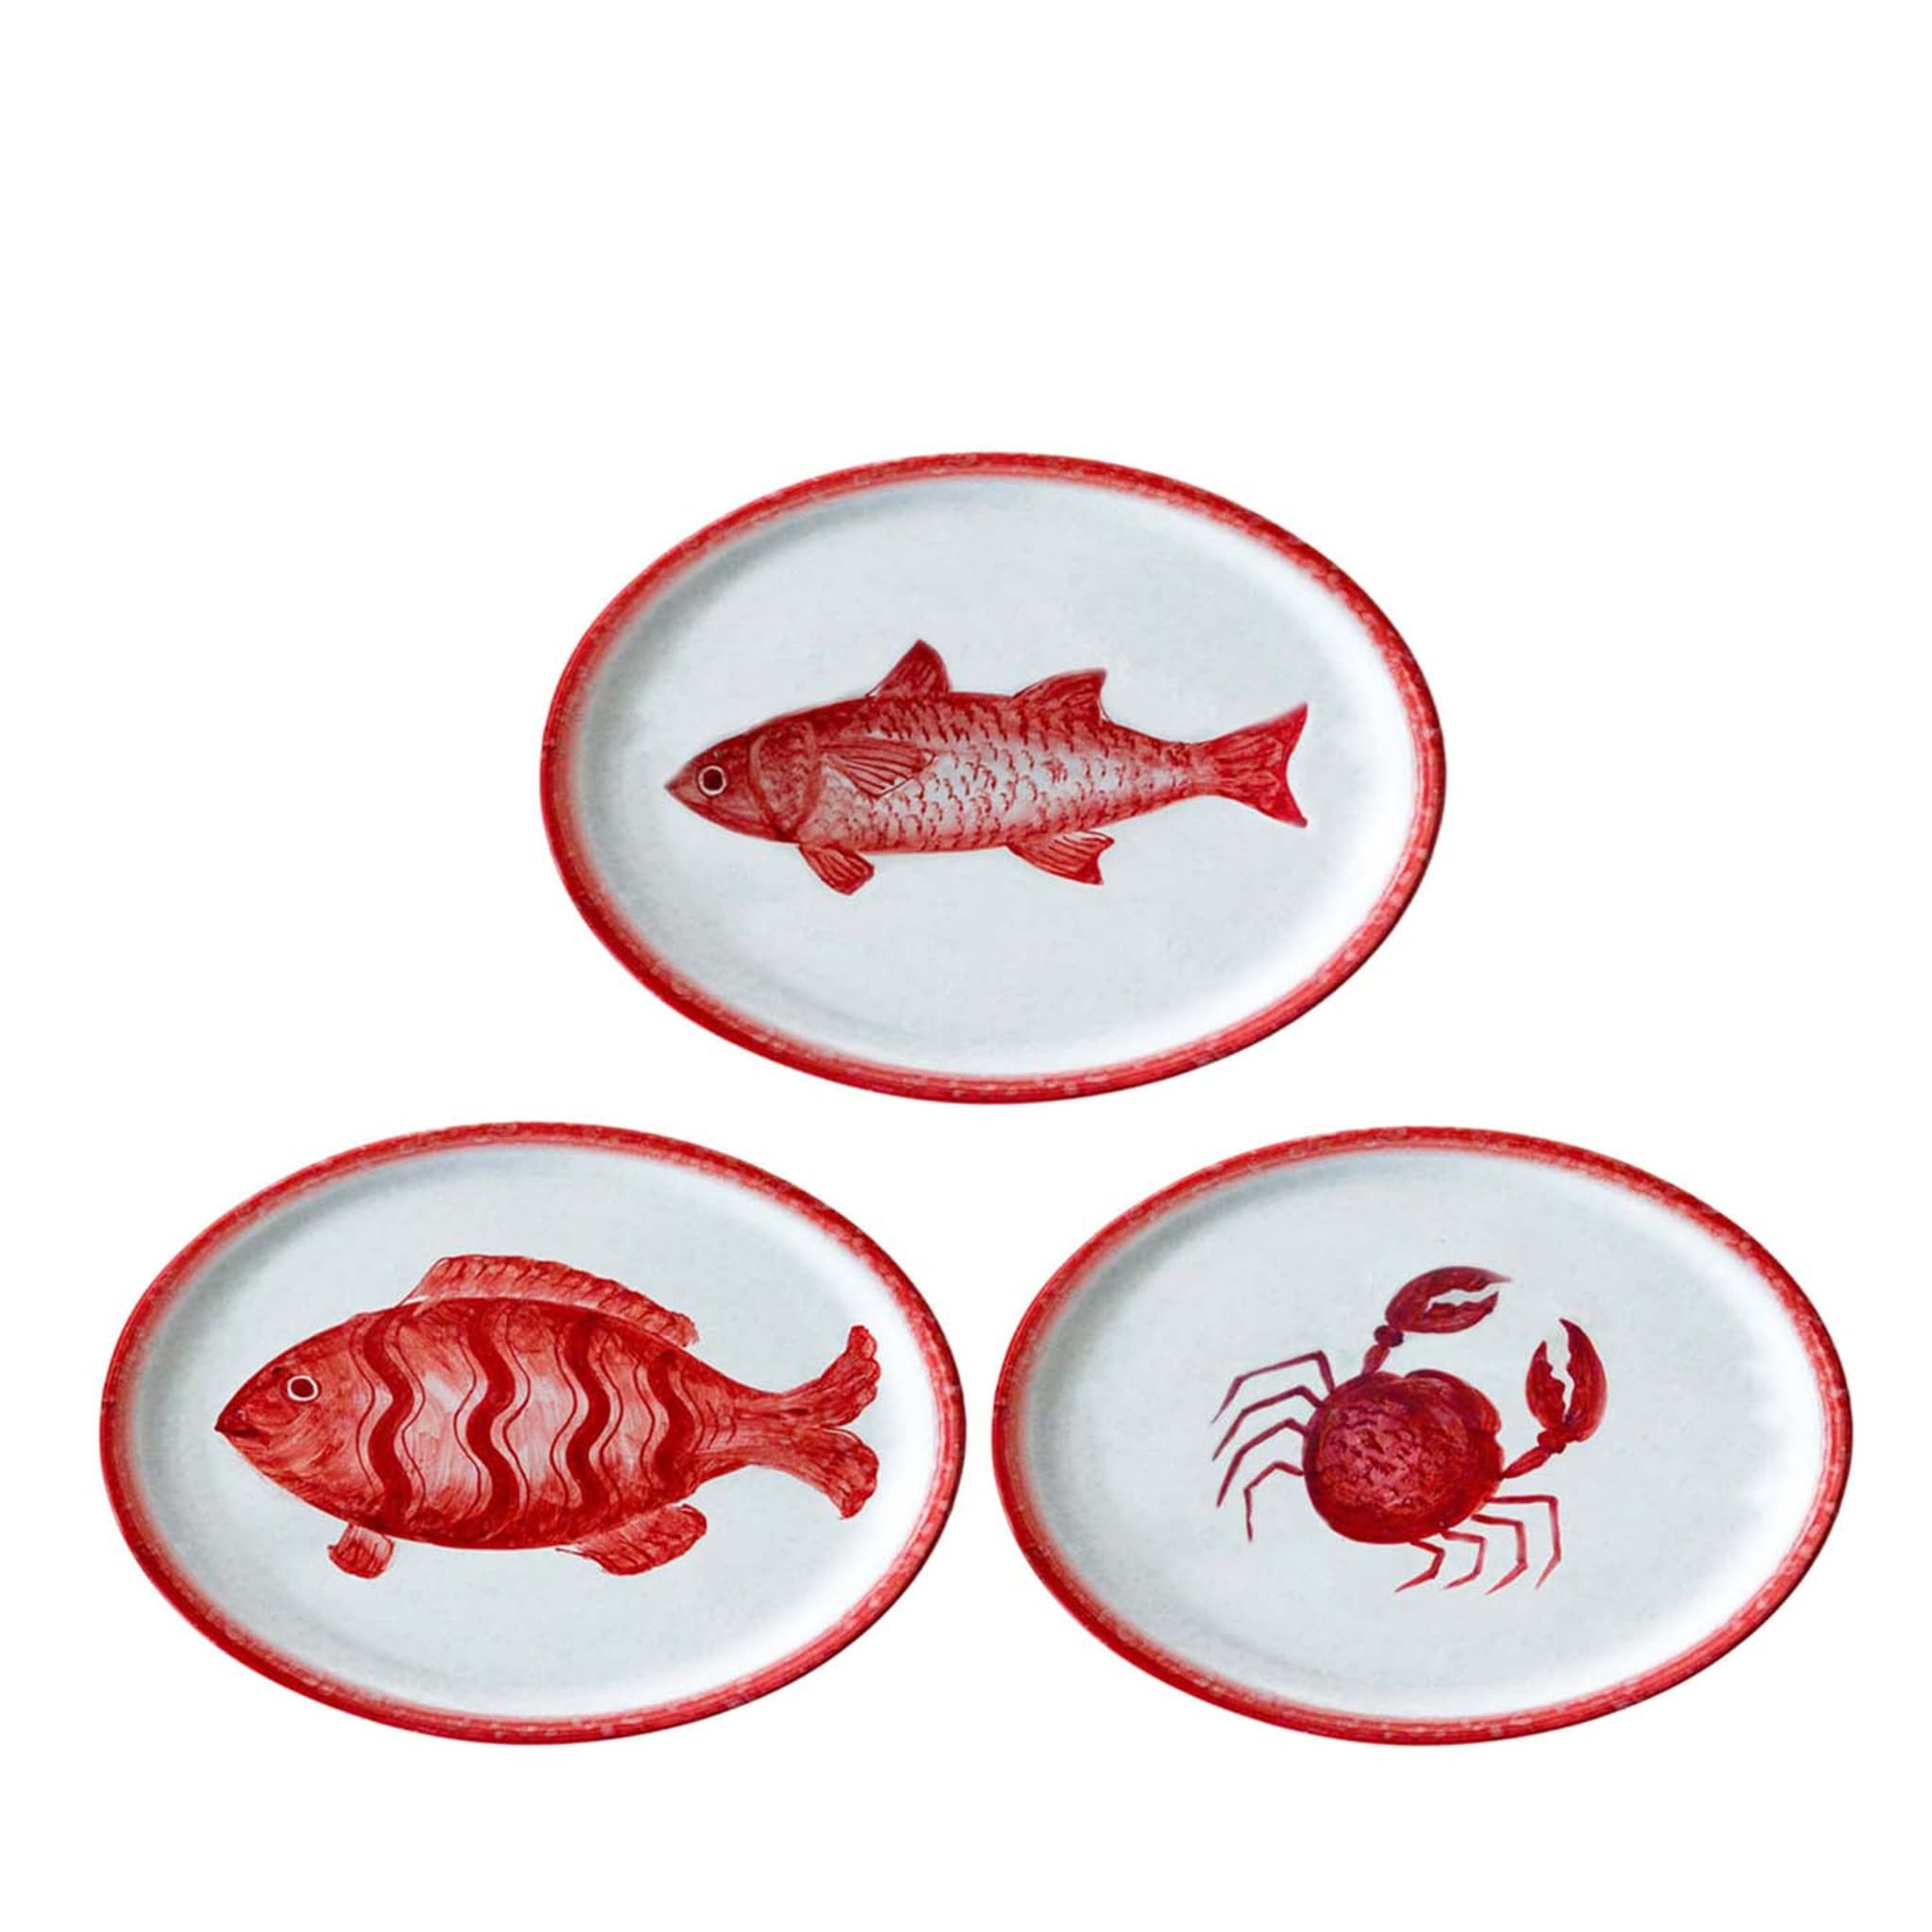 Osteria 3er-Set mittelgroße rote ovale Tabletts 35x23cm - Hauptansicht